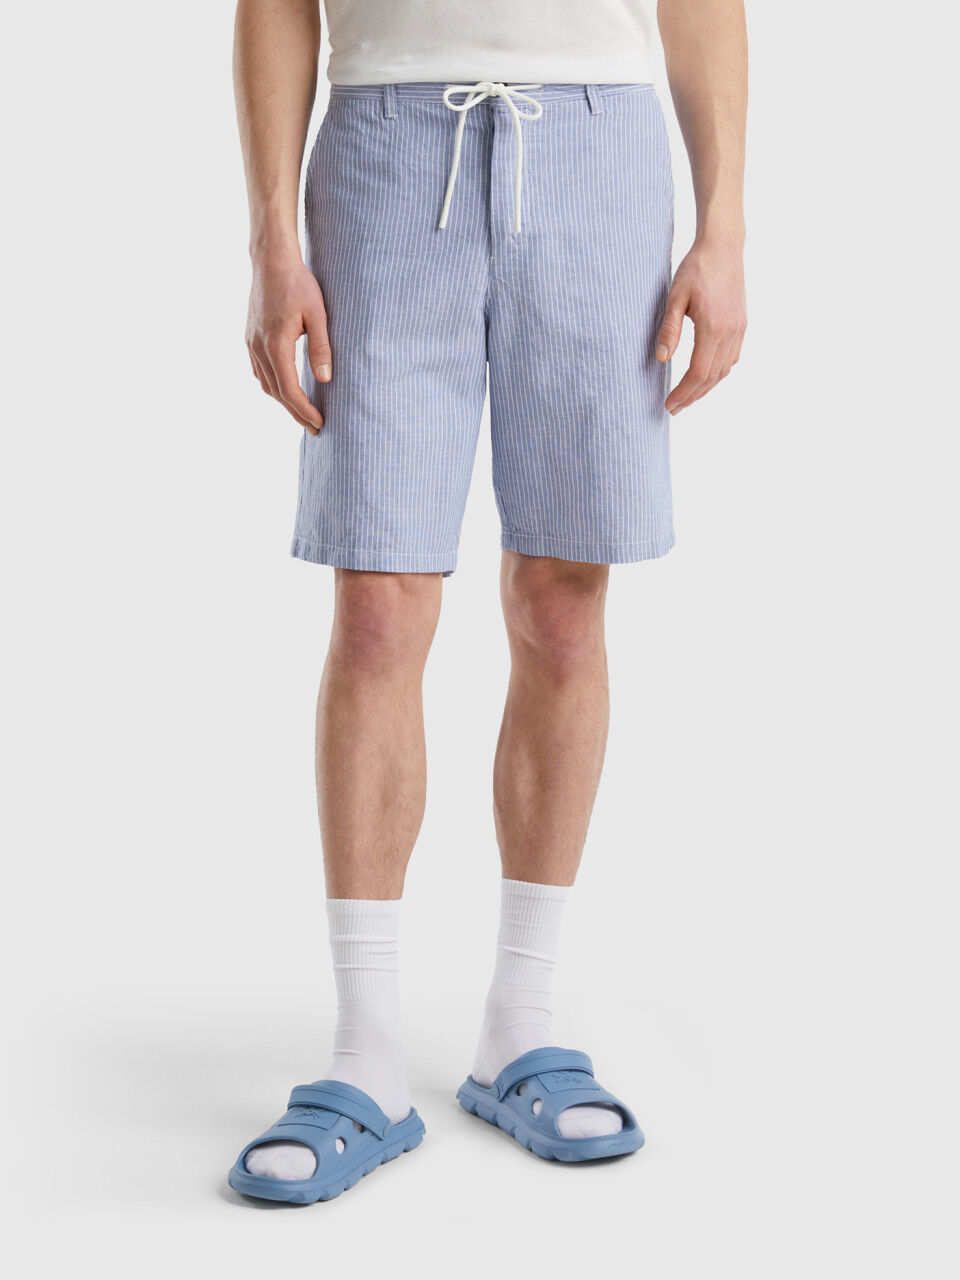 Custom Wholesale Mens Short Trousers Supplier Manufacturer - LANXIN APPAREL